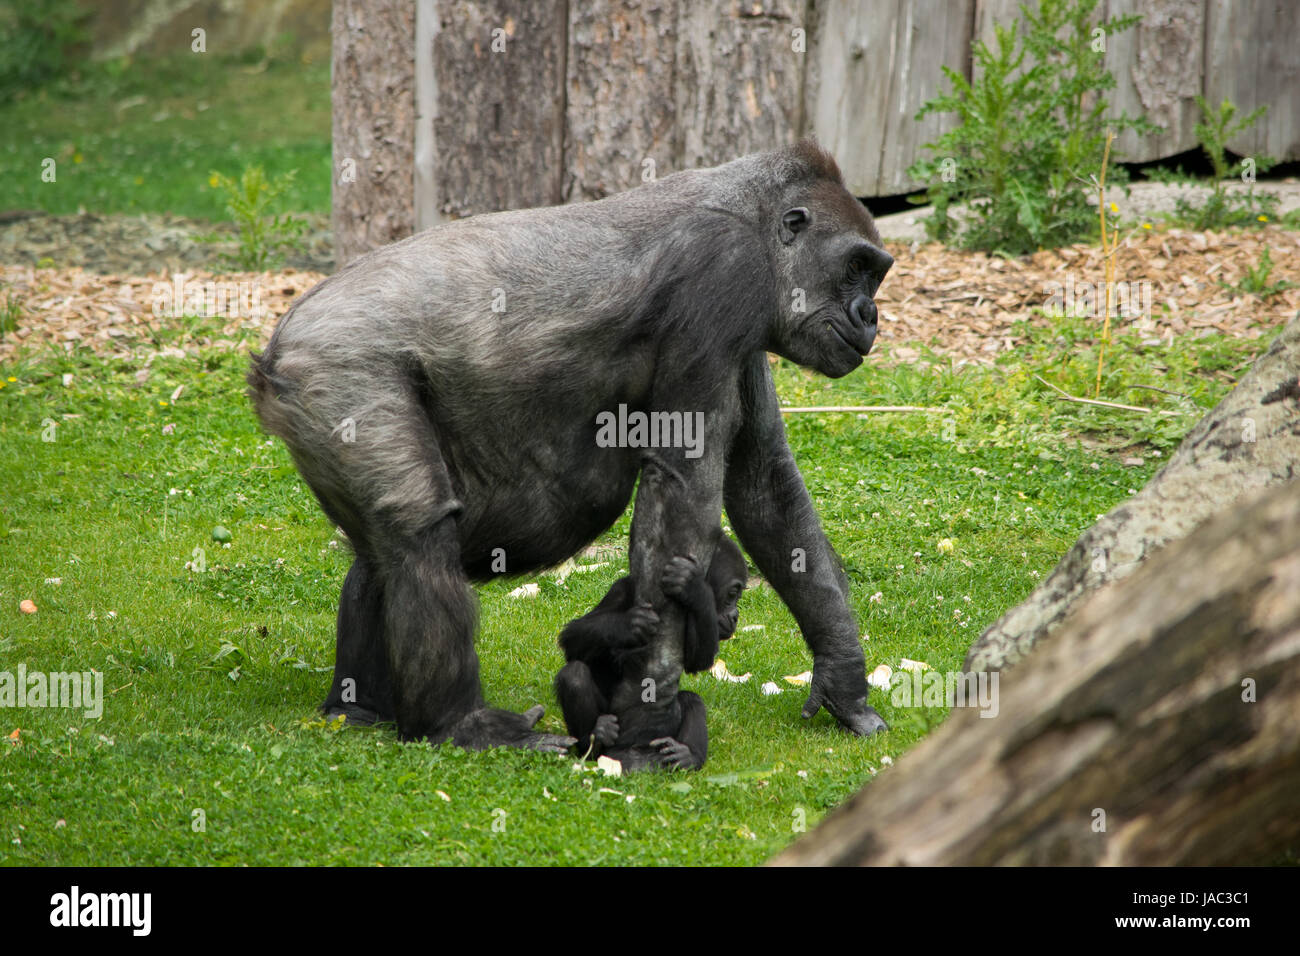 Gorilla mit Baby, Babygorilla, gorillababy, gorilla with baby Stock Photo